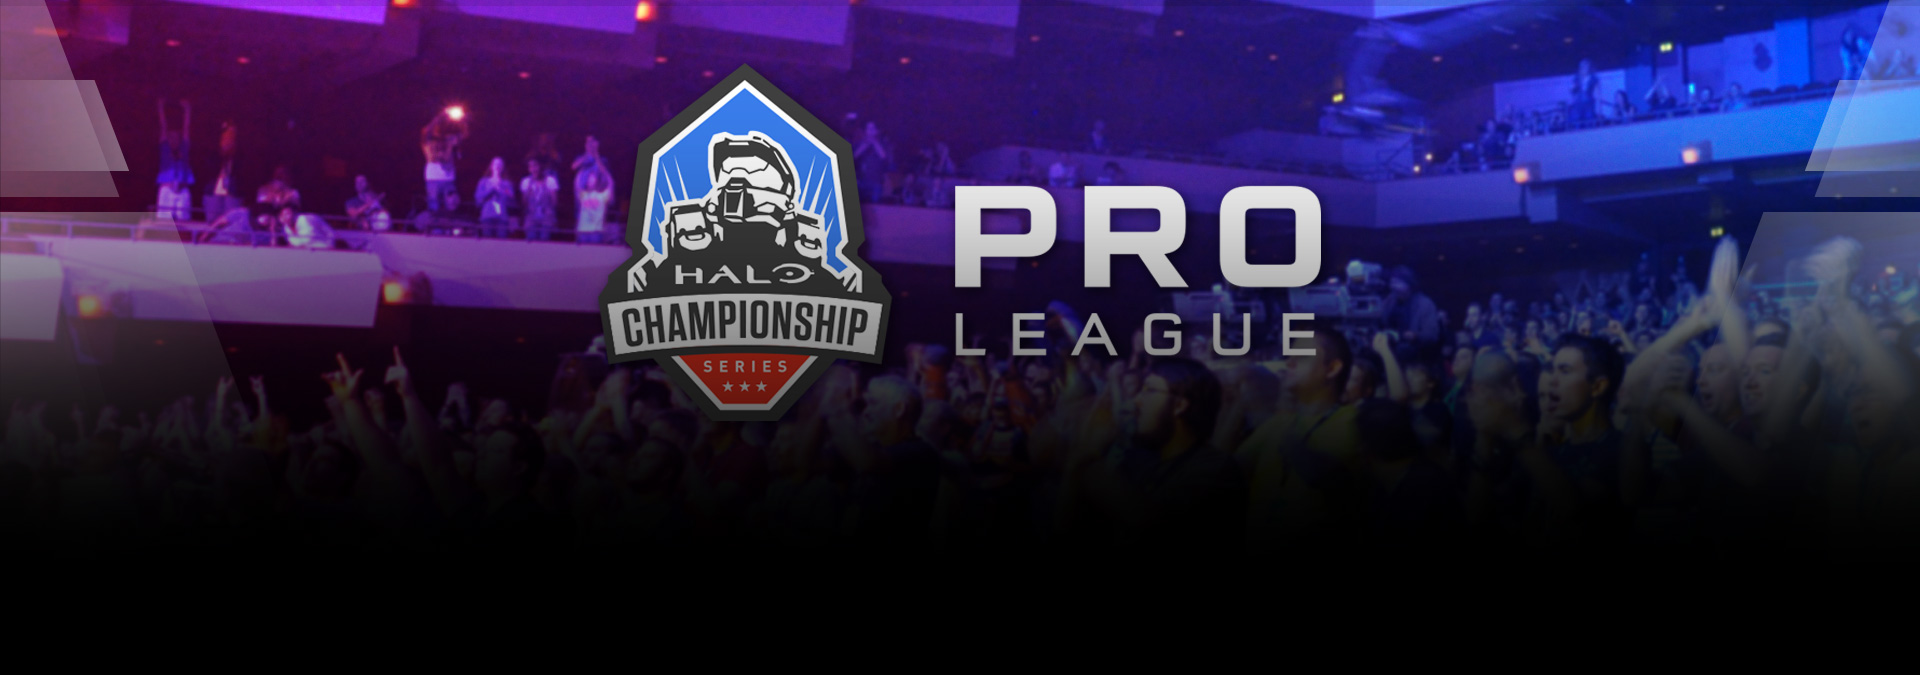 Halo Championship Series Pro League | Halo - Official Site